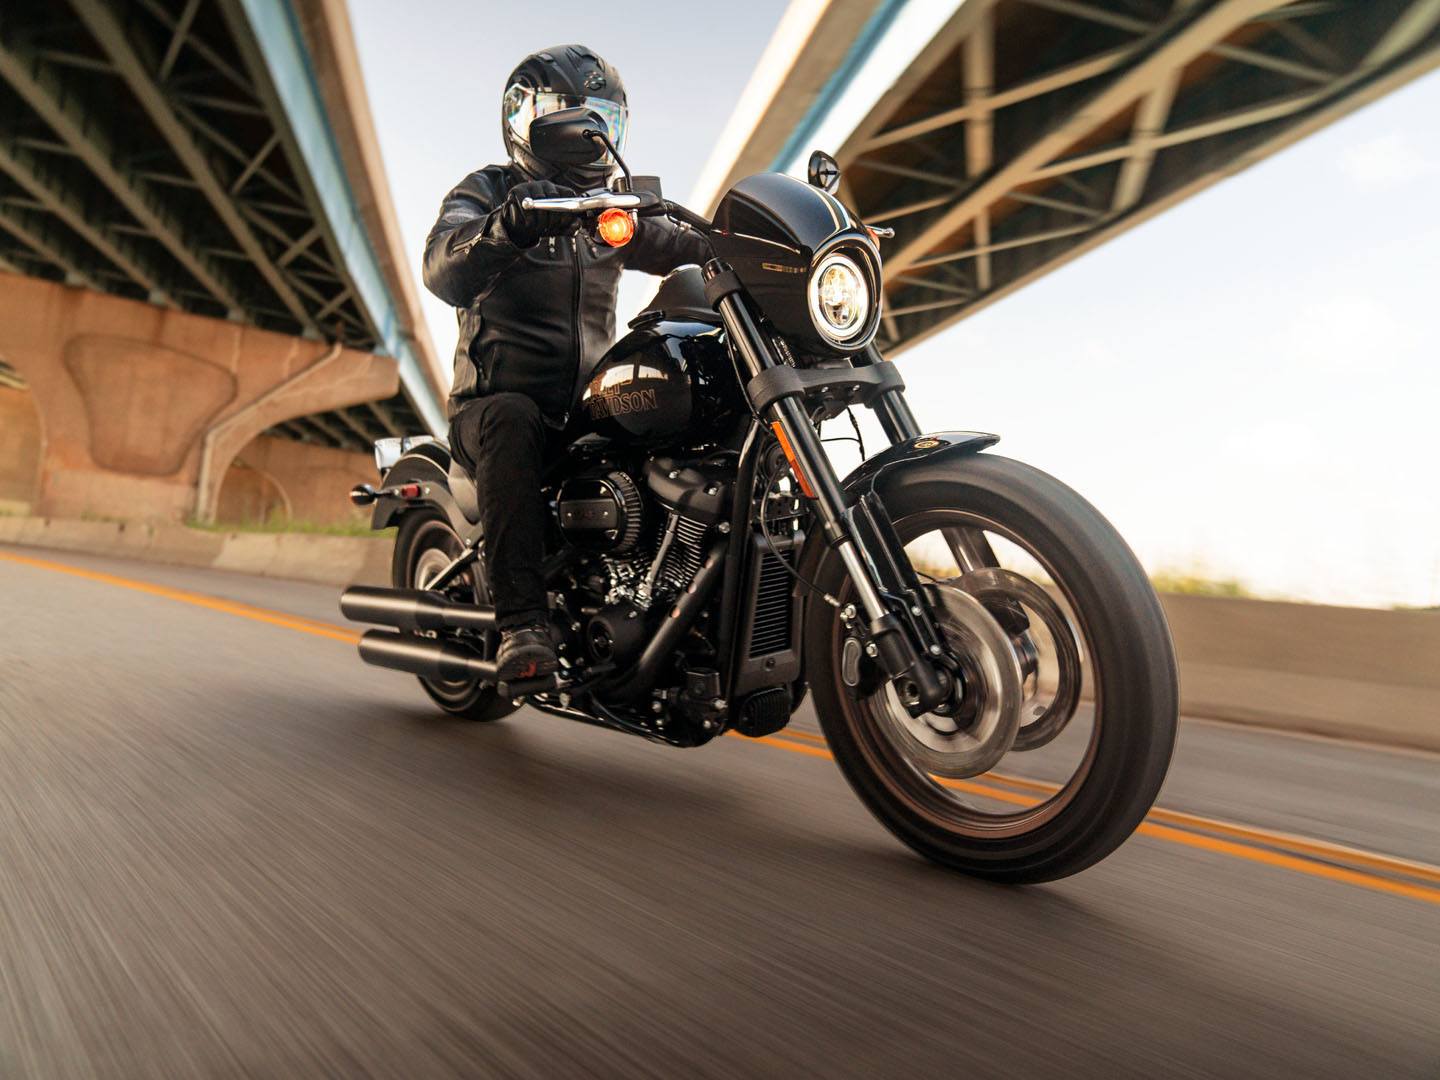 2021 Harley-Davidson Low Rider®S in Morgantown, West Virginia